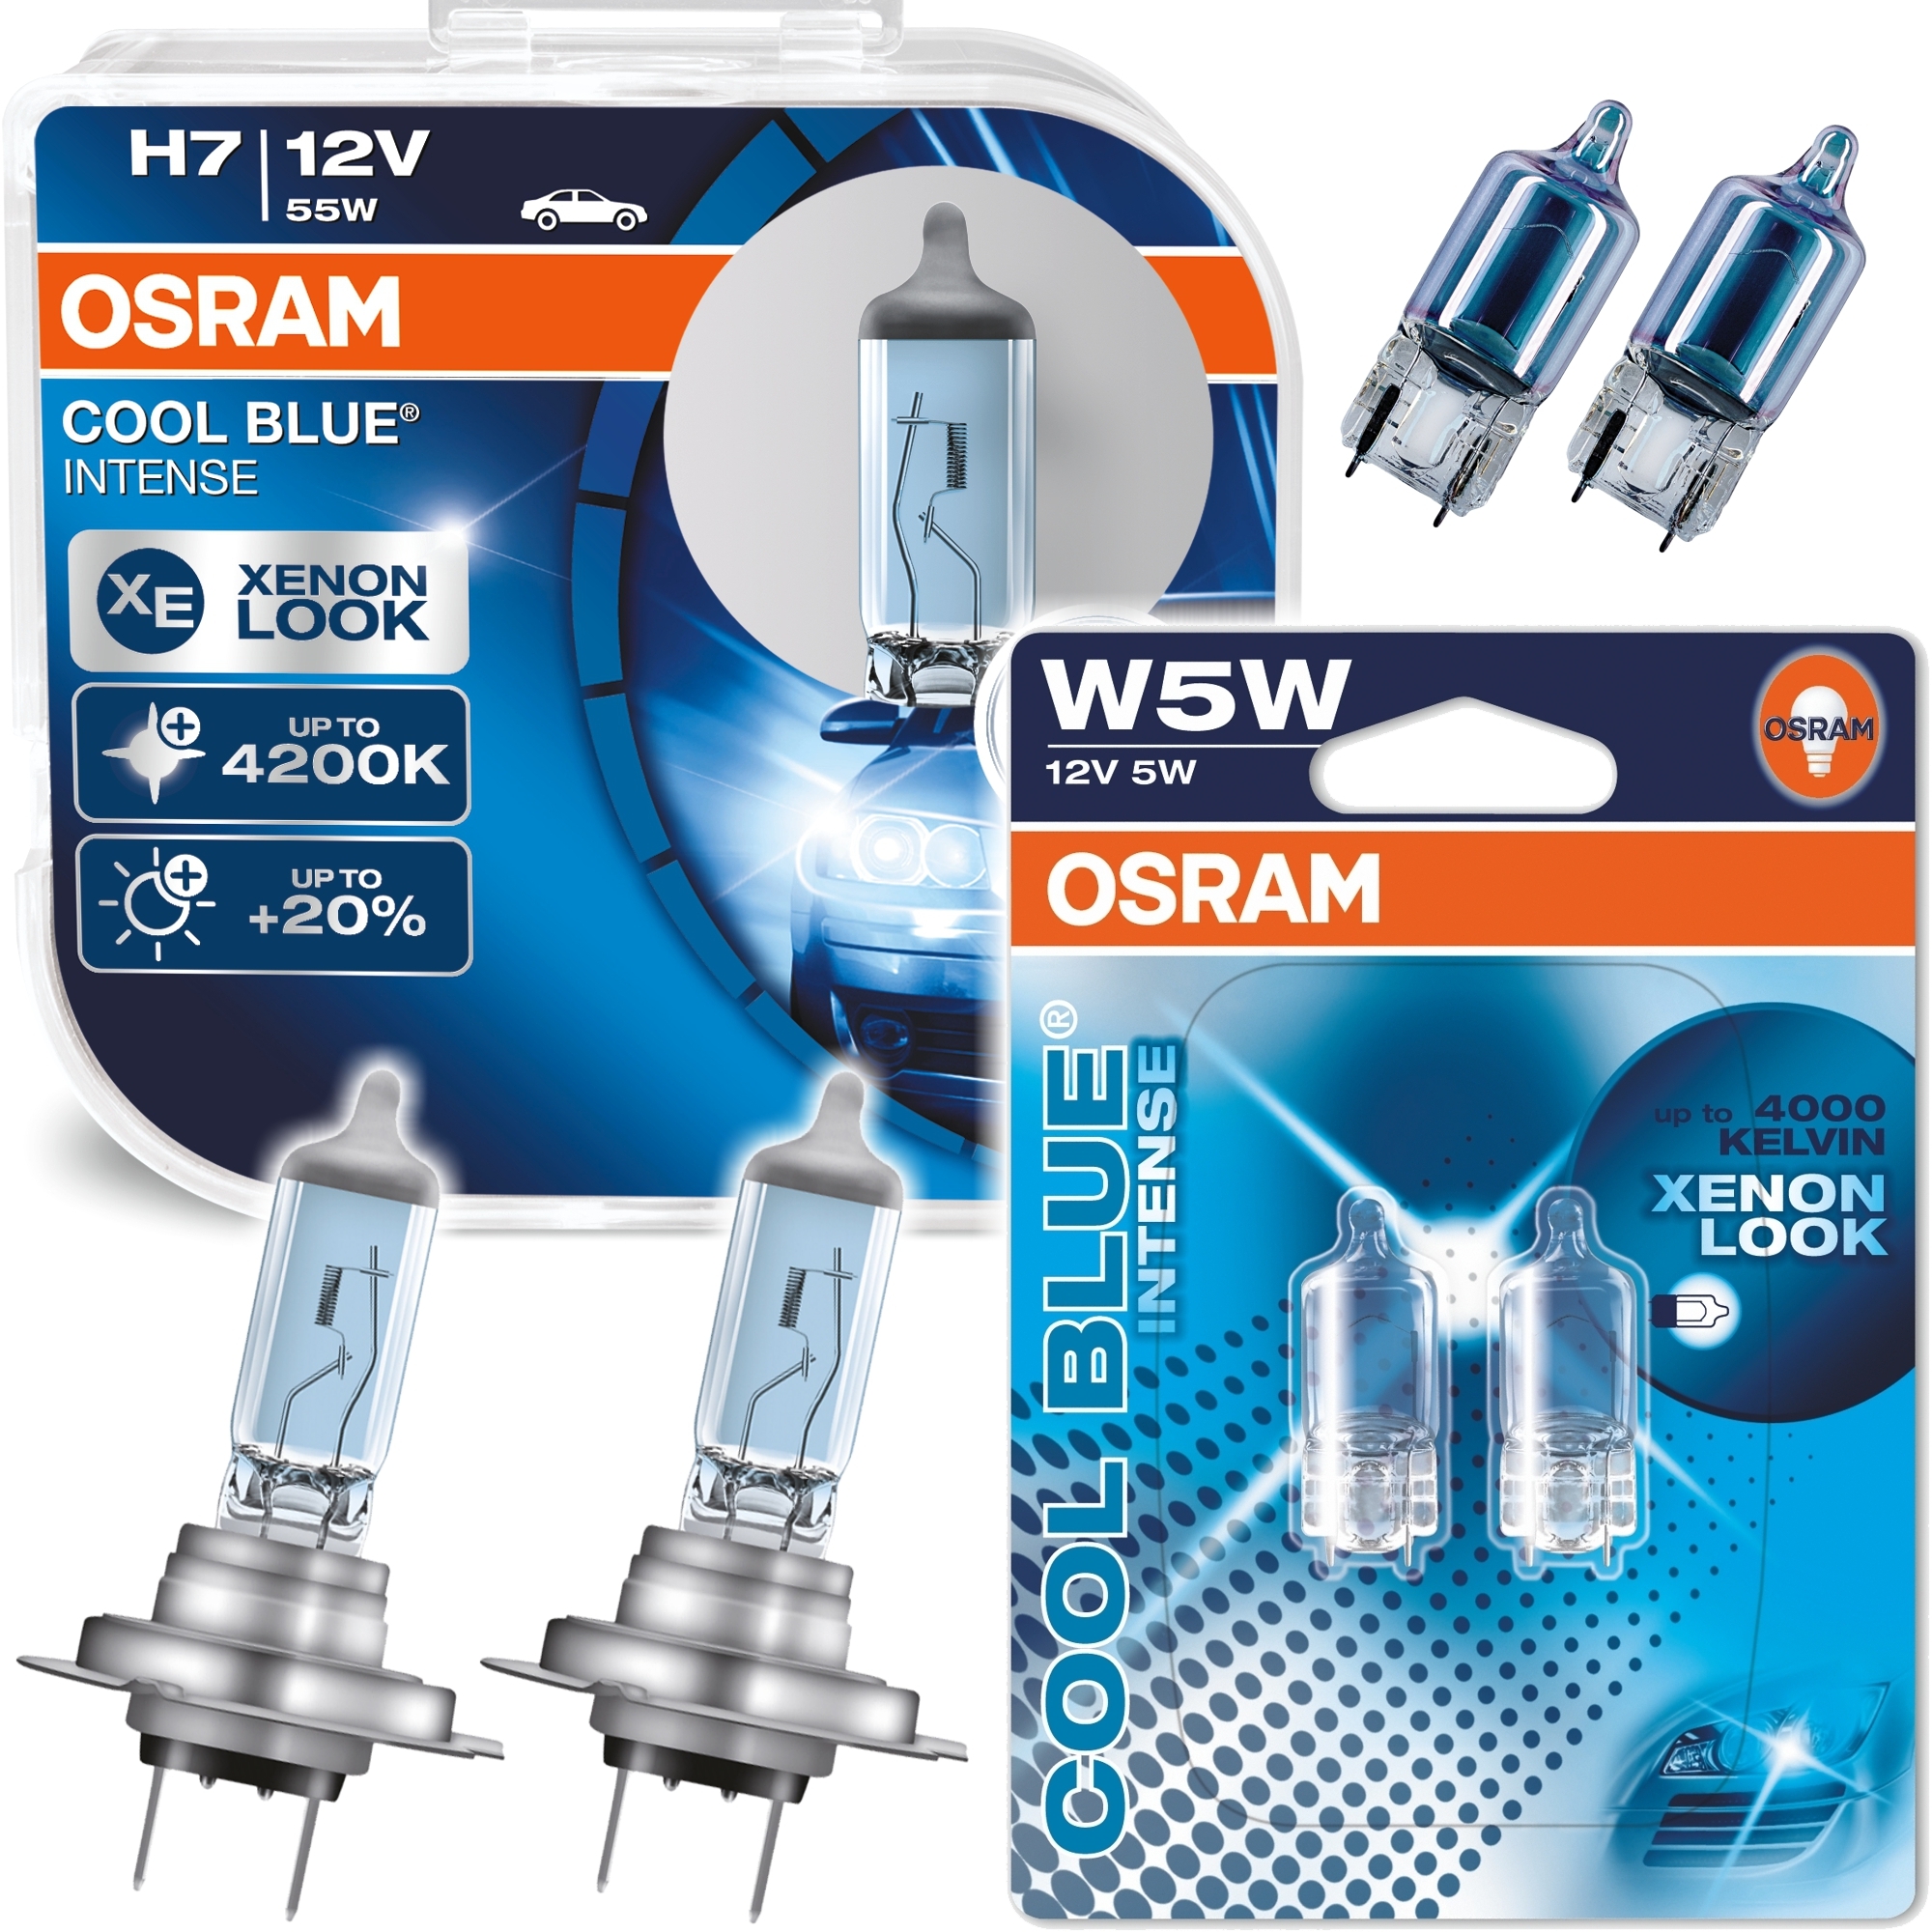 OSRAM Cool Blue Intense H7 + W5w